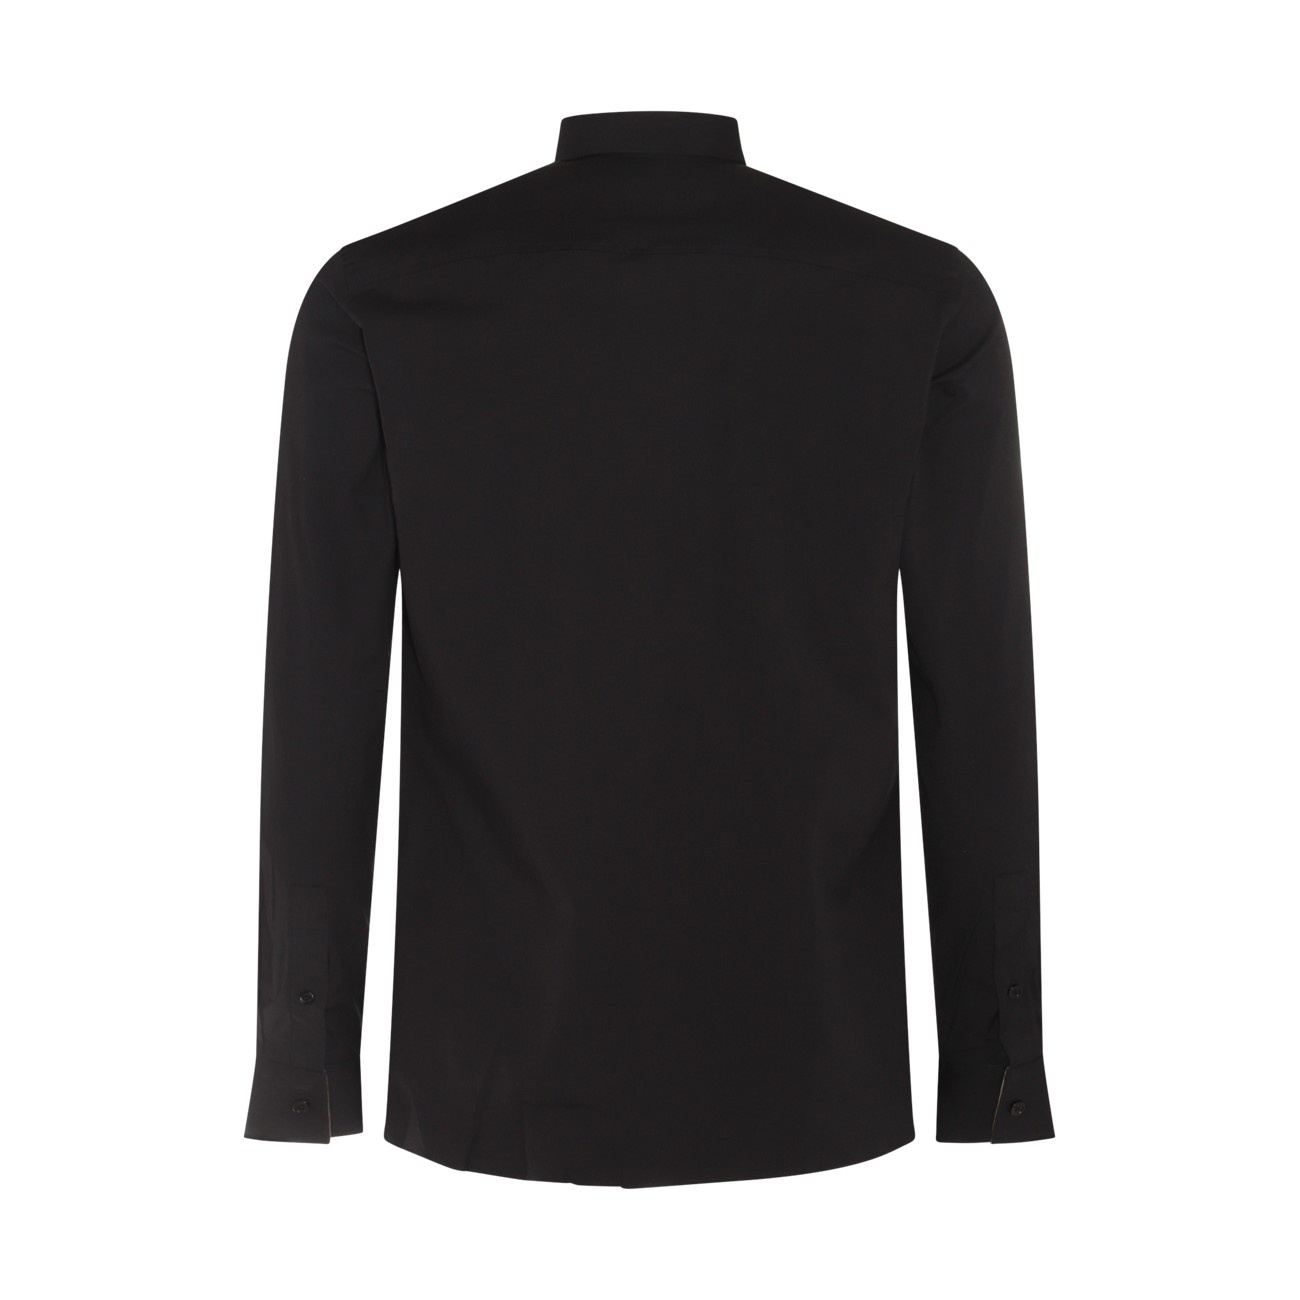 black cotton shirt - 2